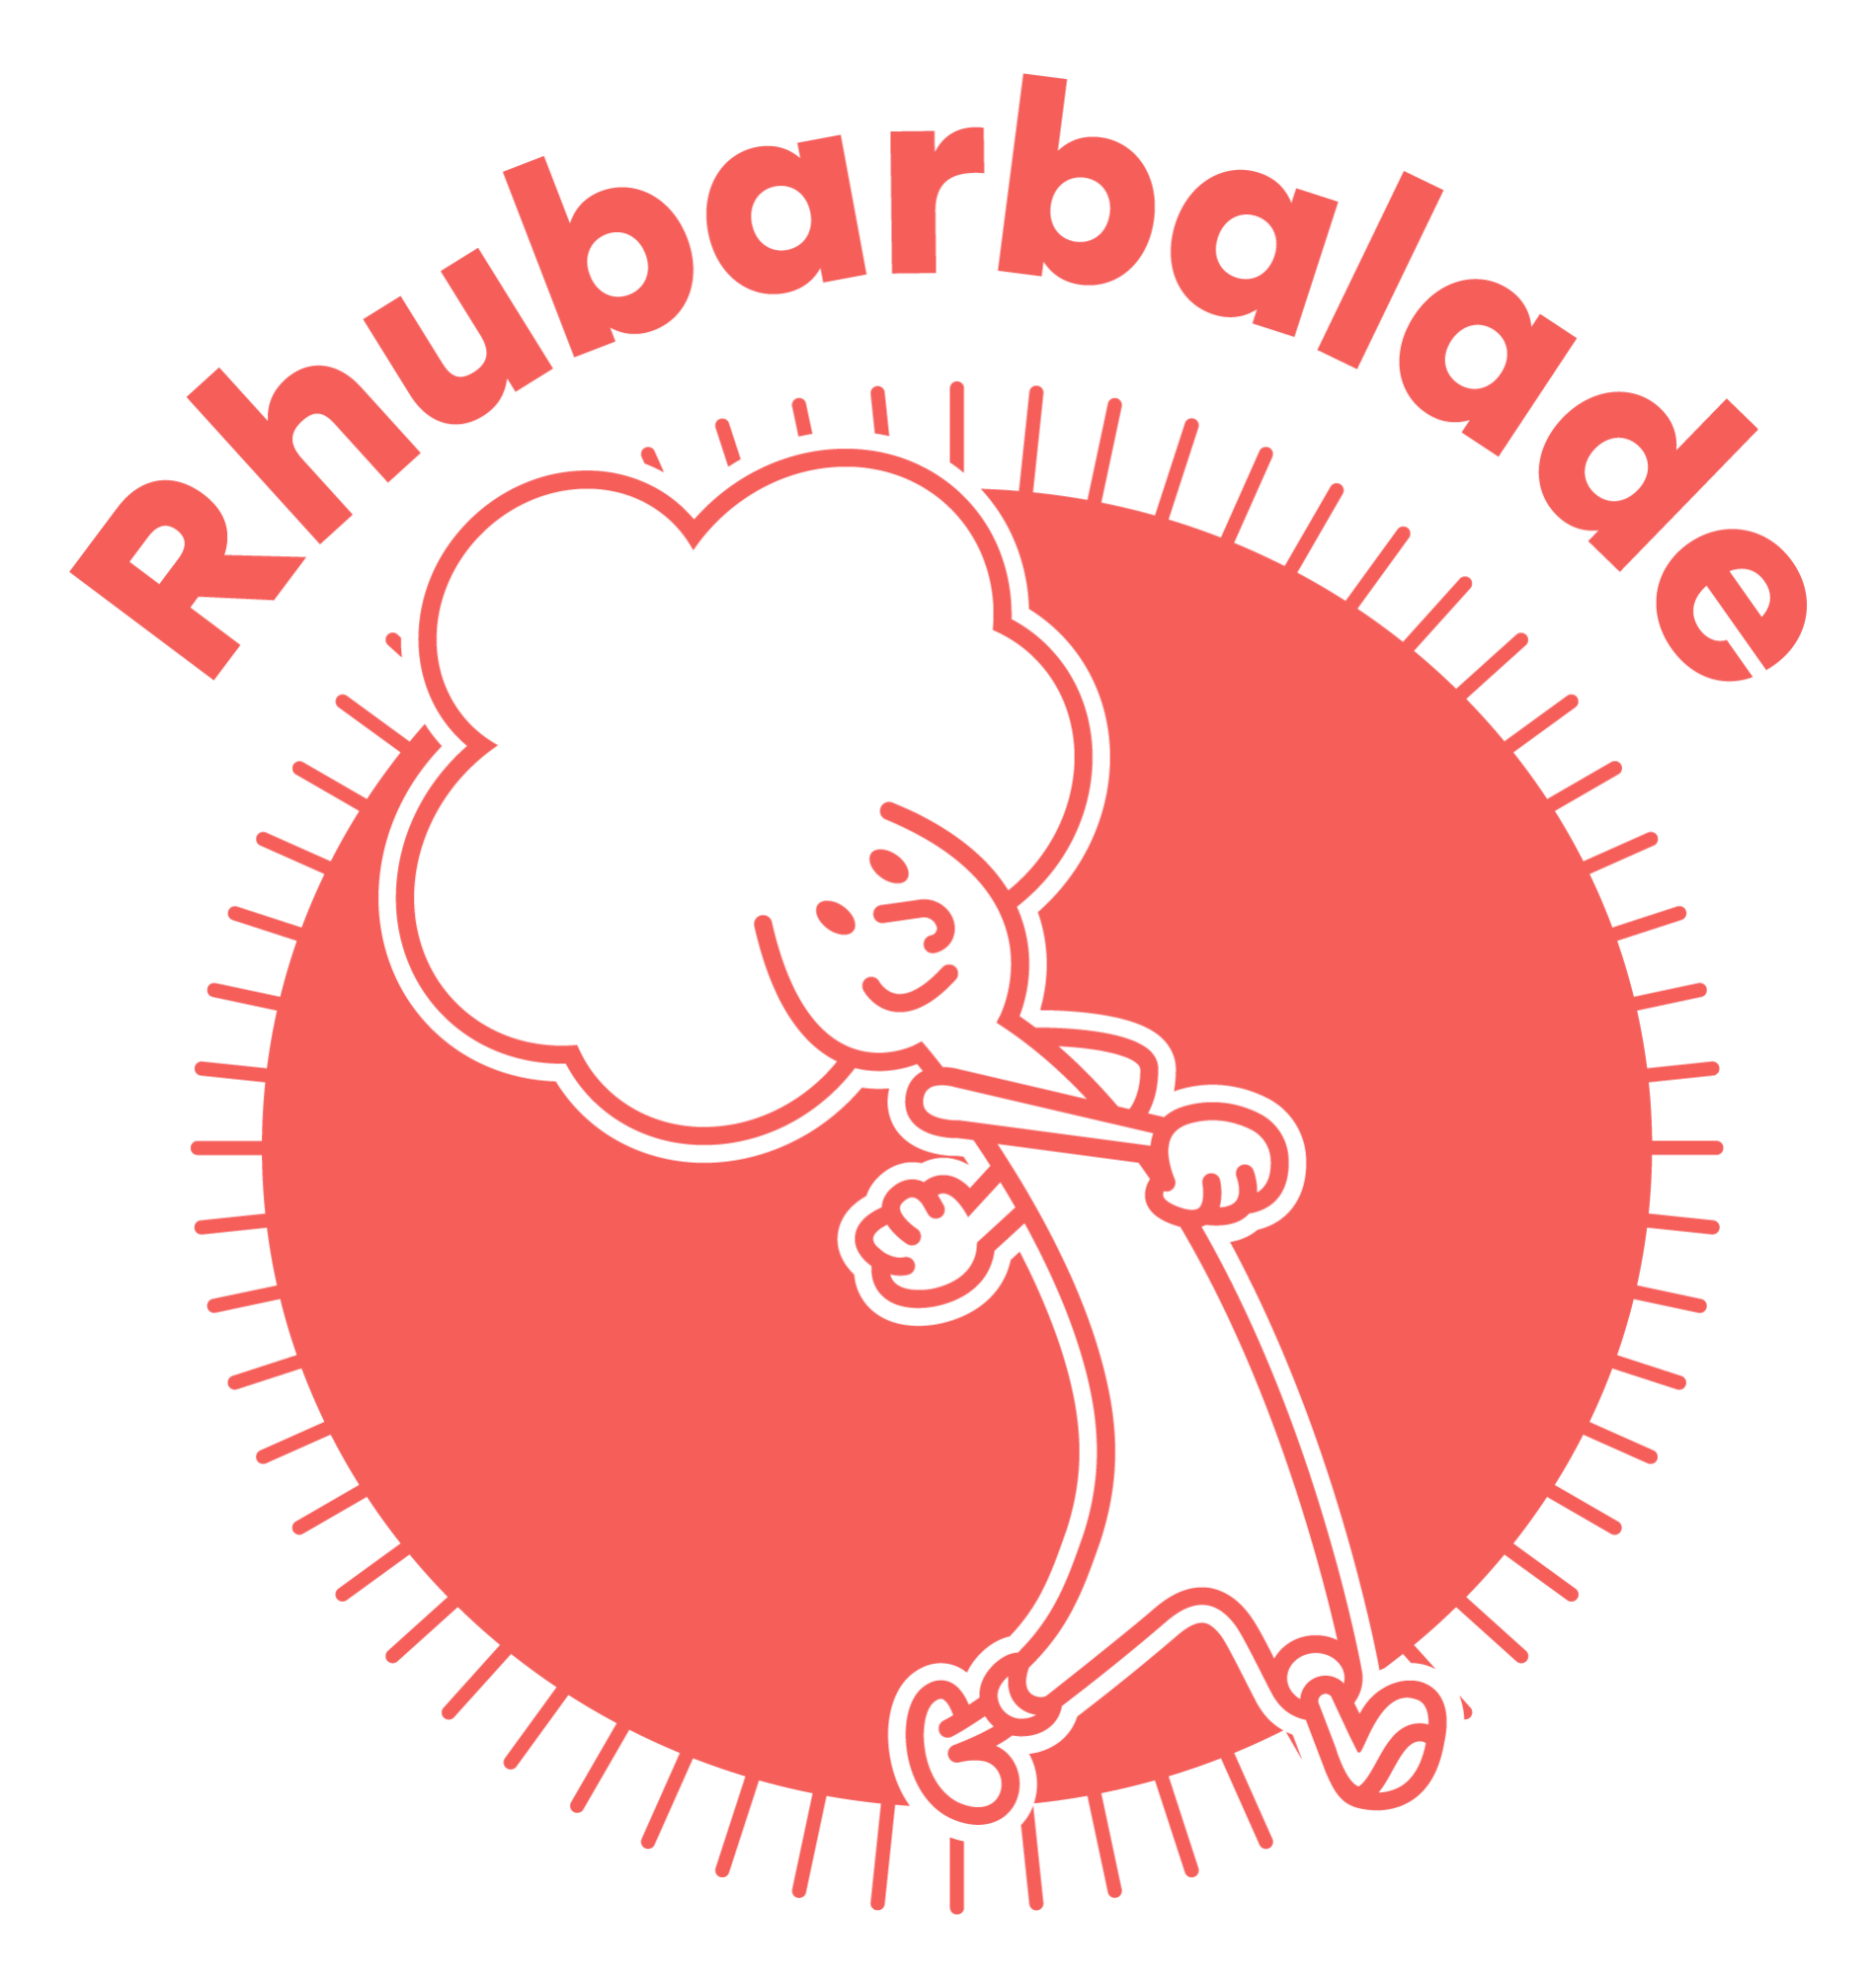 Rhubarbalade logo